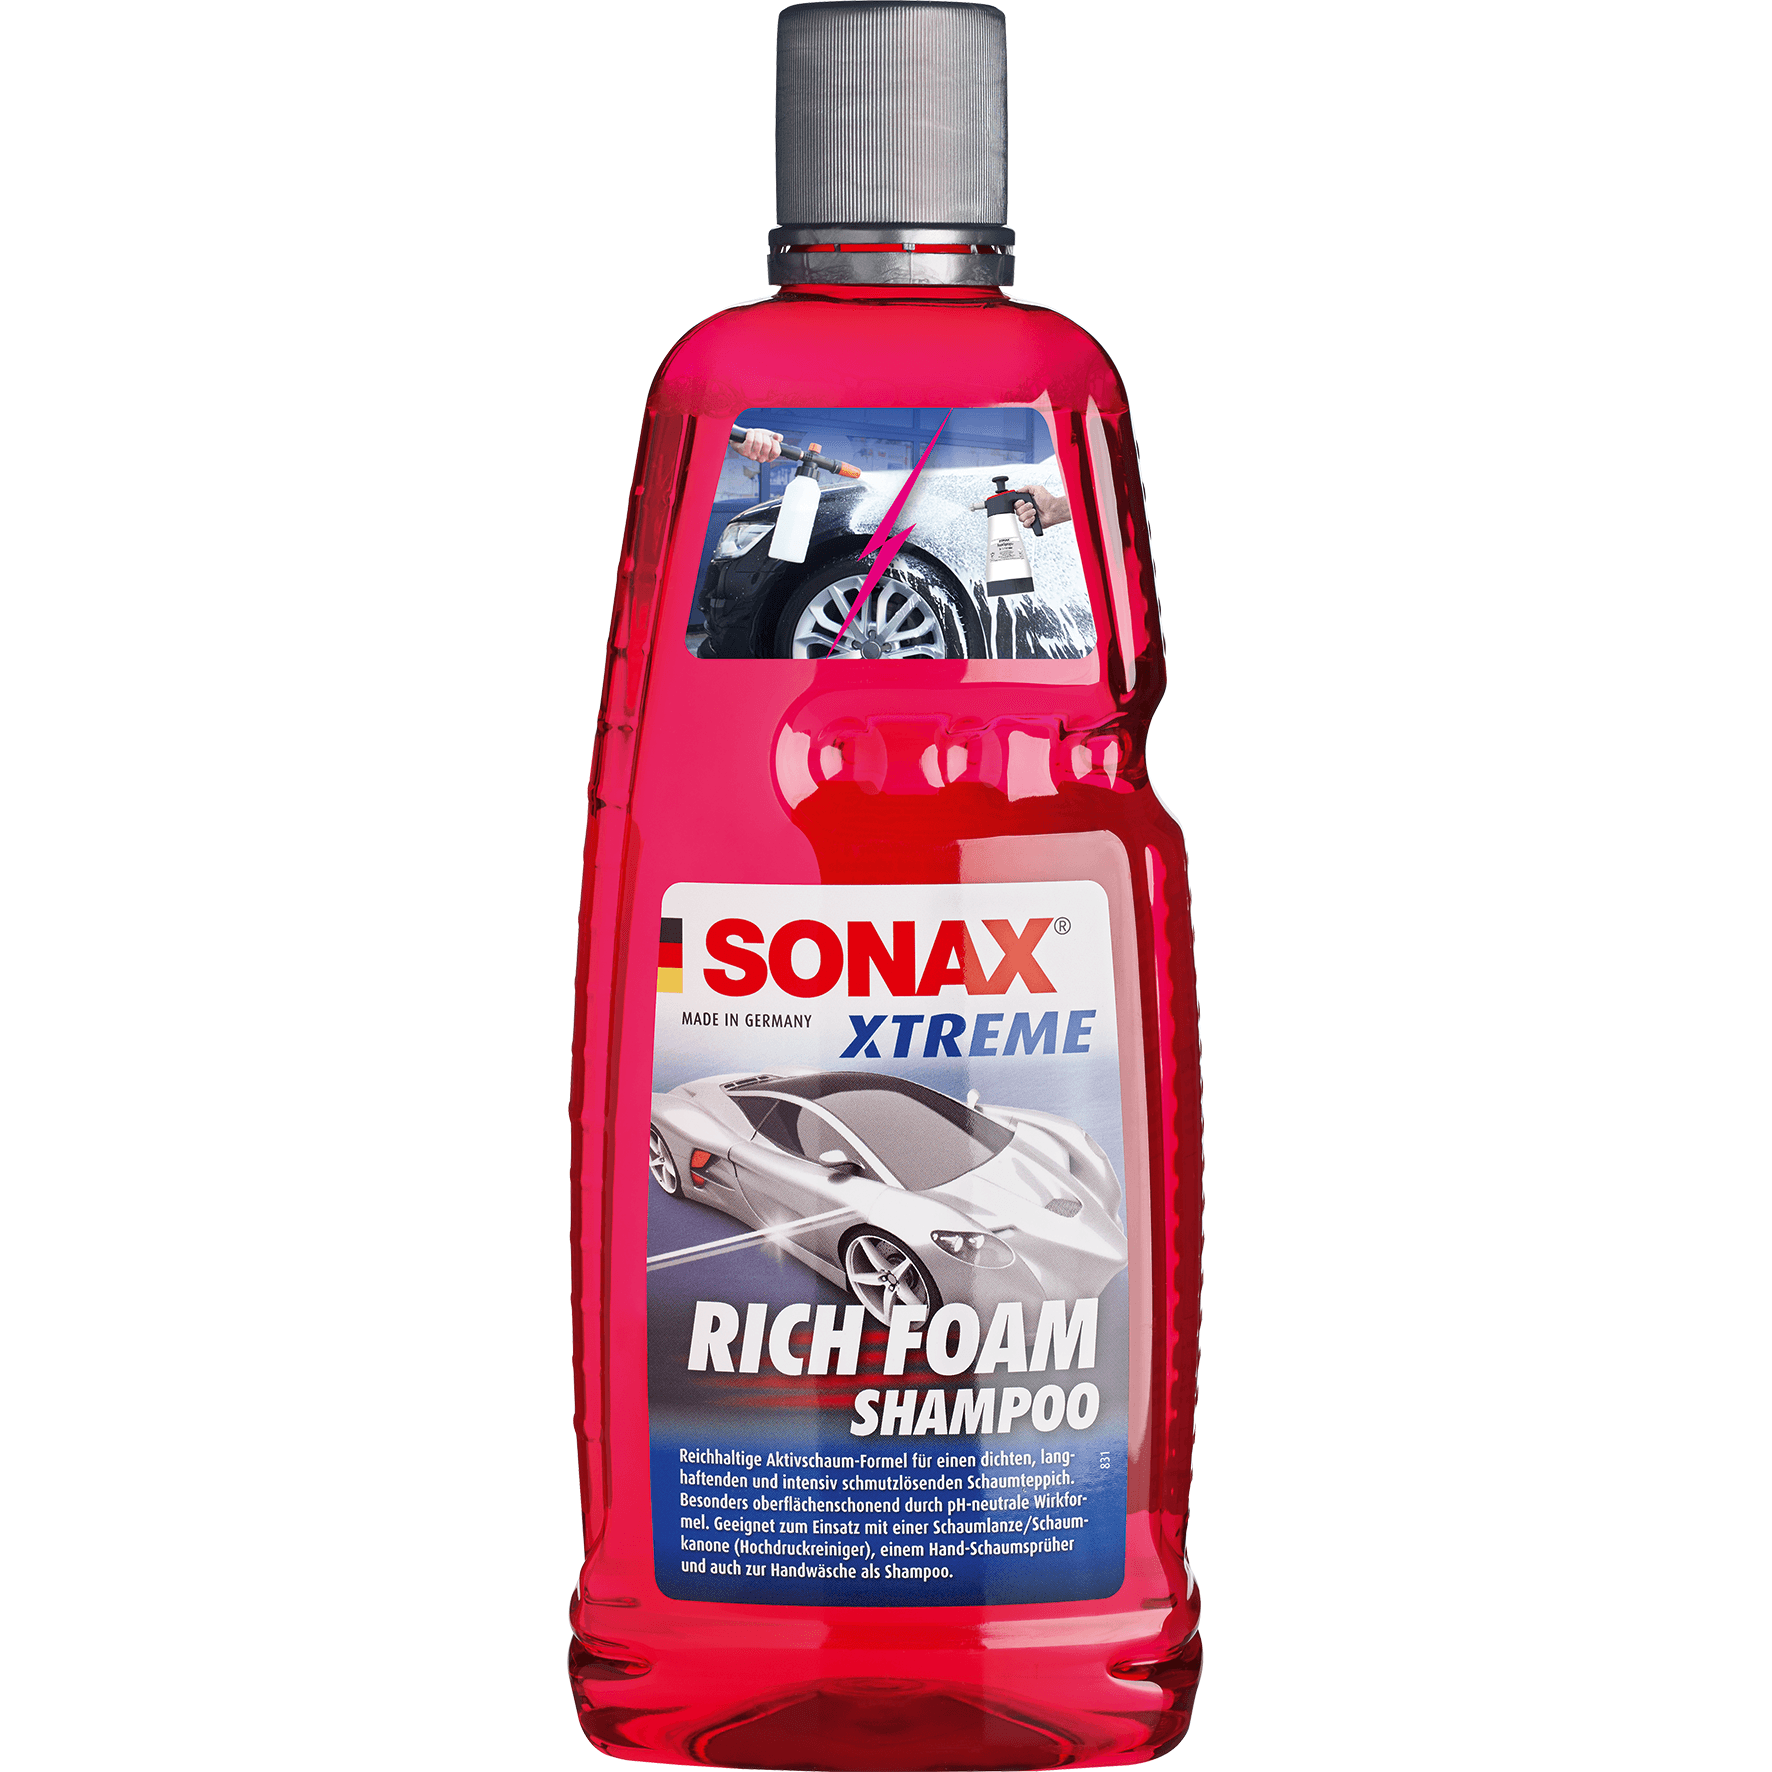 SONAX Xtreme RichFoam Shampoo 1L - Xpert Cleaning